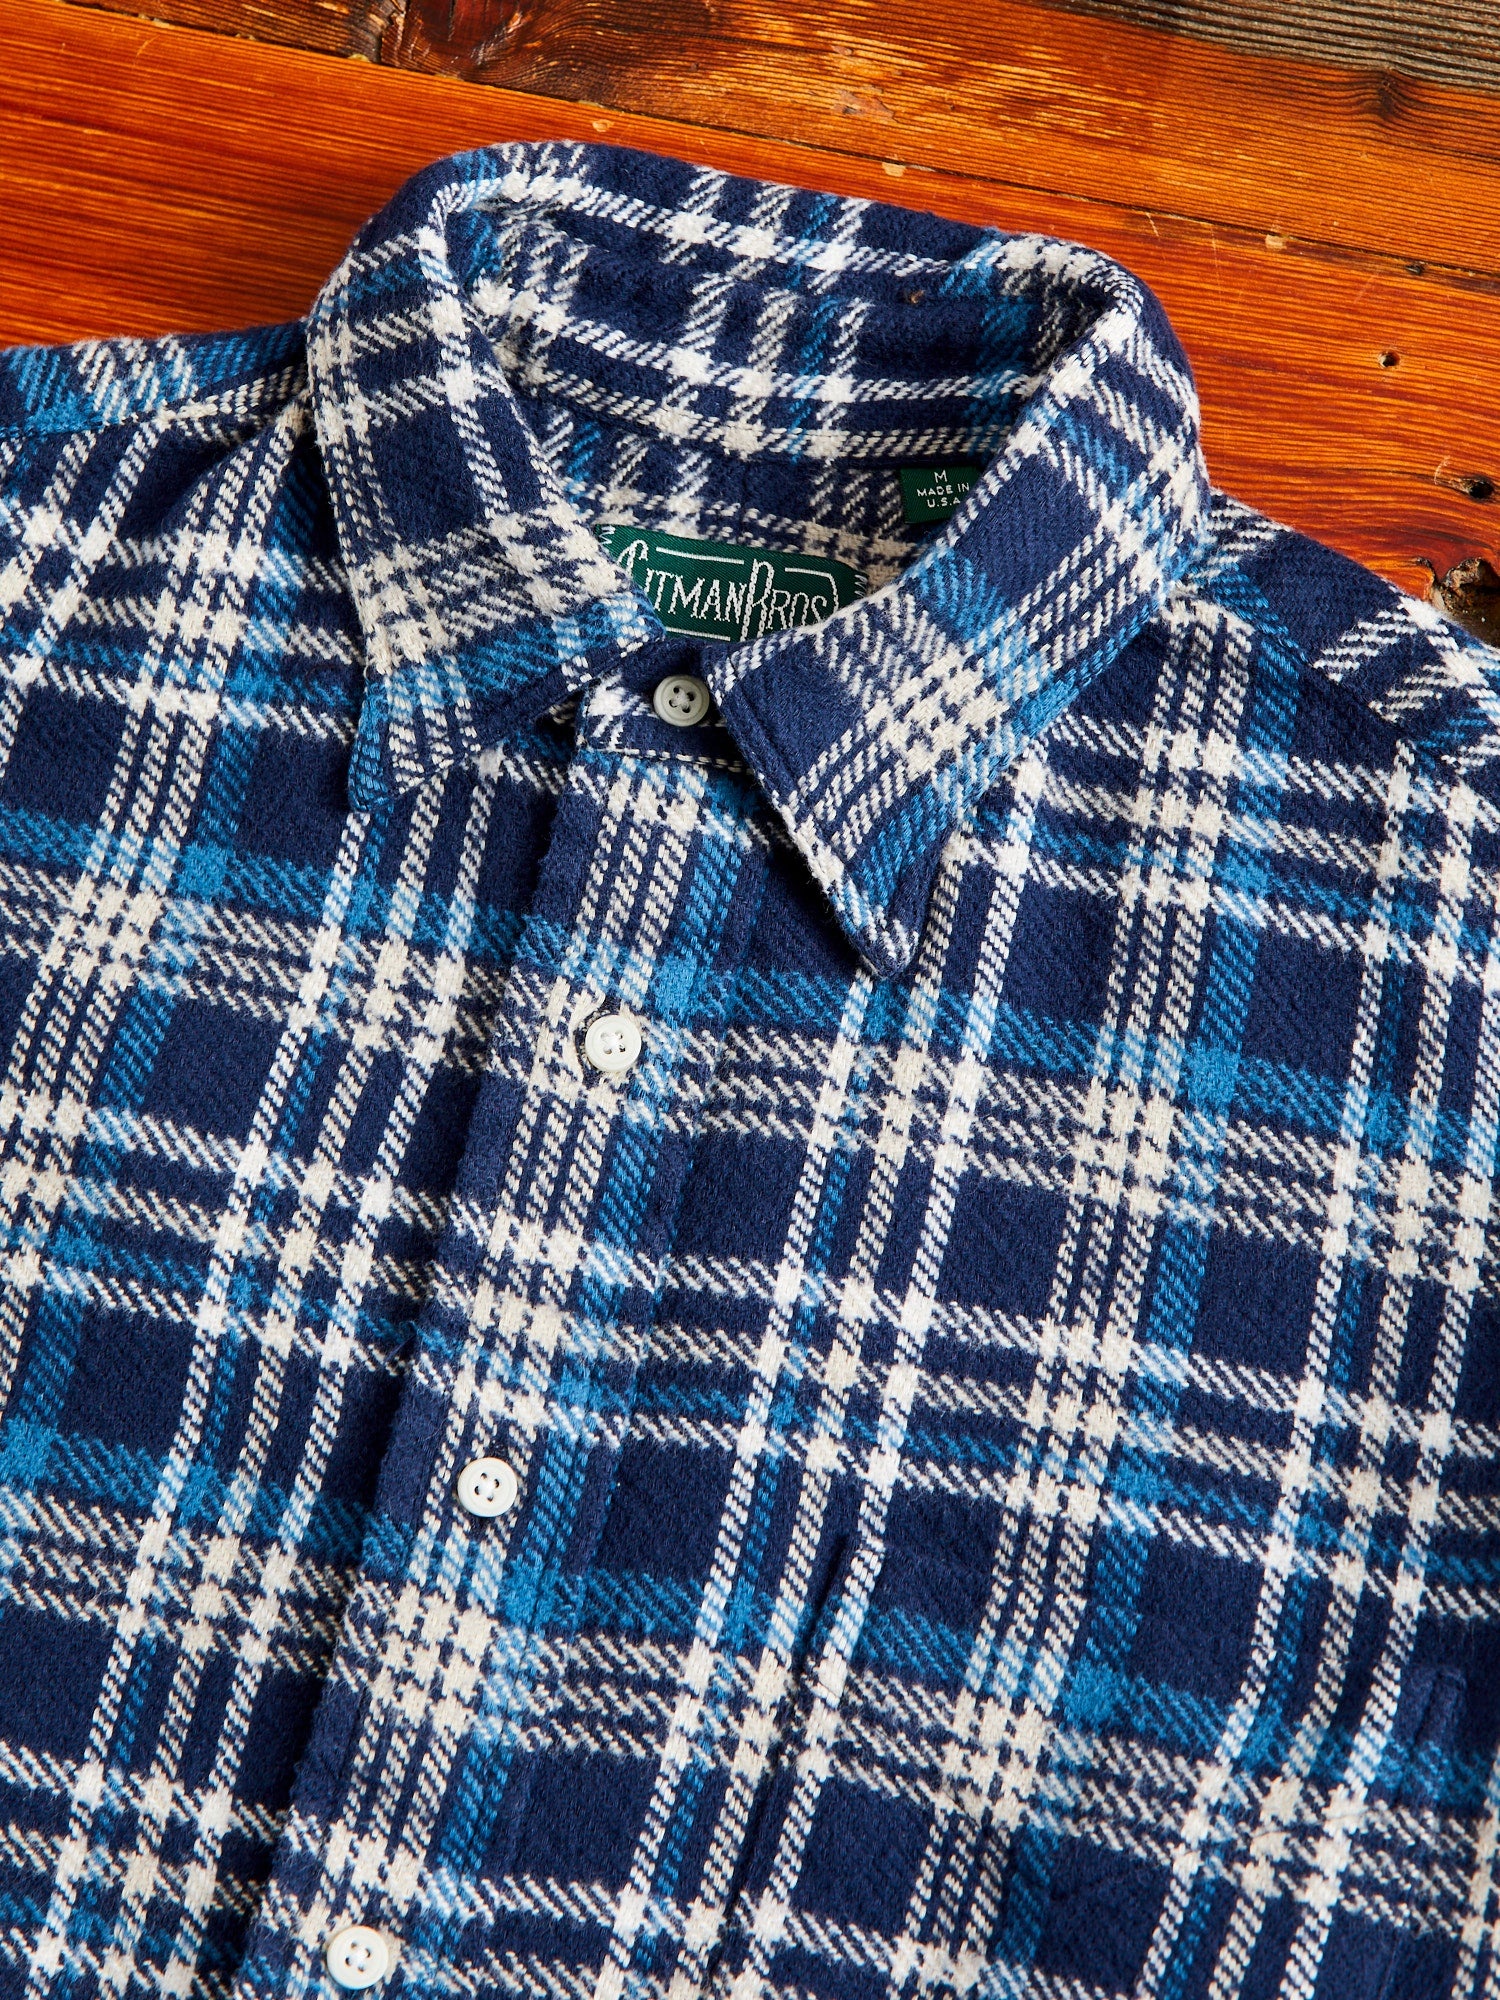 Brushed Triple-Yarn Flannel in Aqua - 3